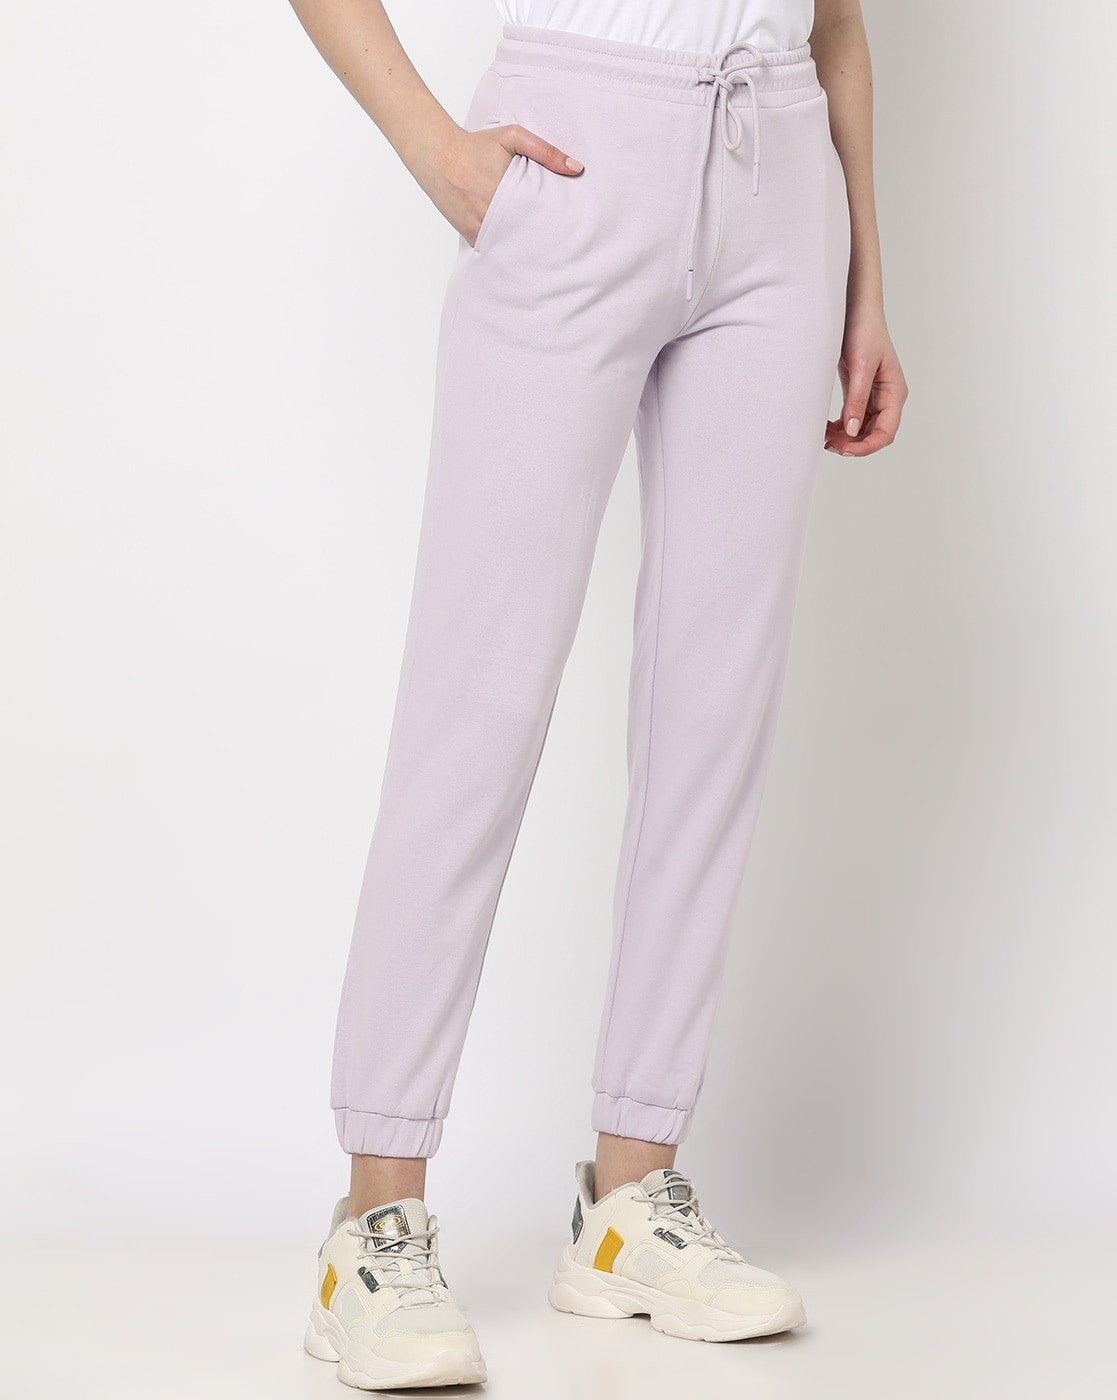 Buy Purple Track Pants by for Fyre Rose Women Online